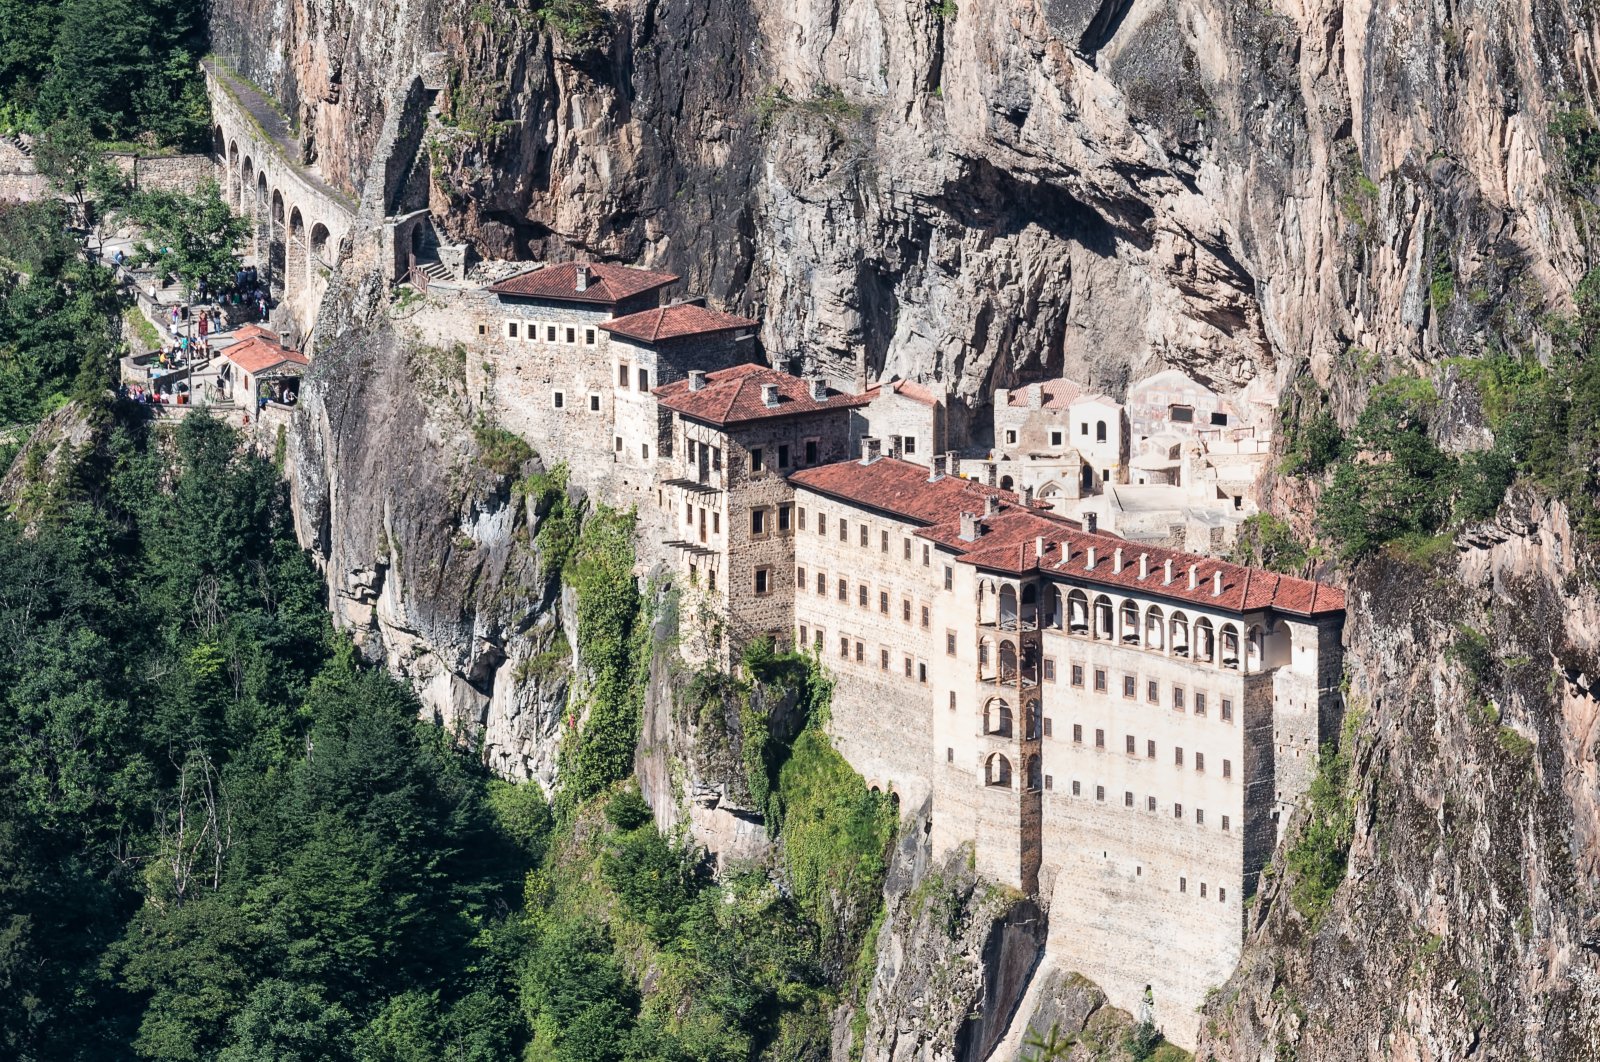 Türkiye’s iconic Sümela Monastery draws growing number of visitors